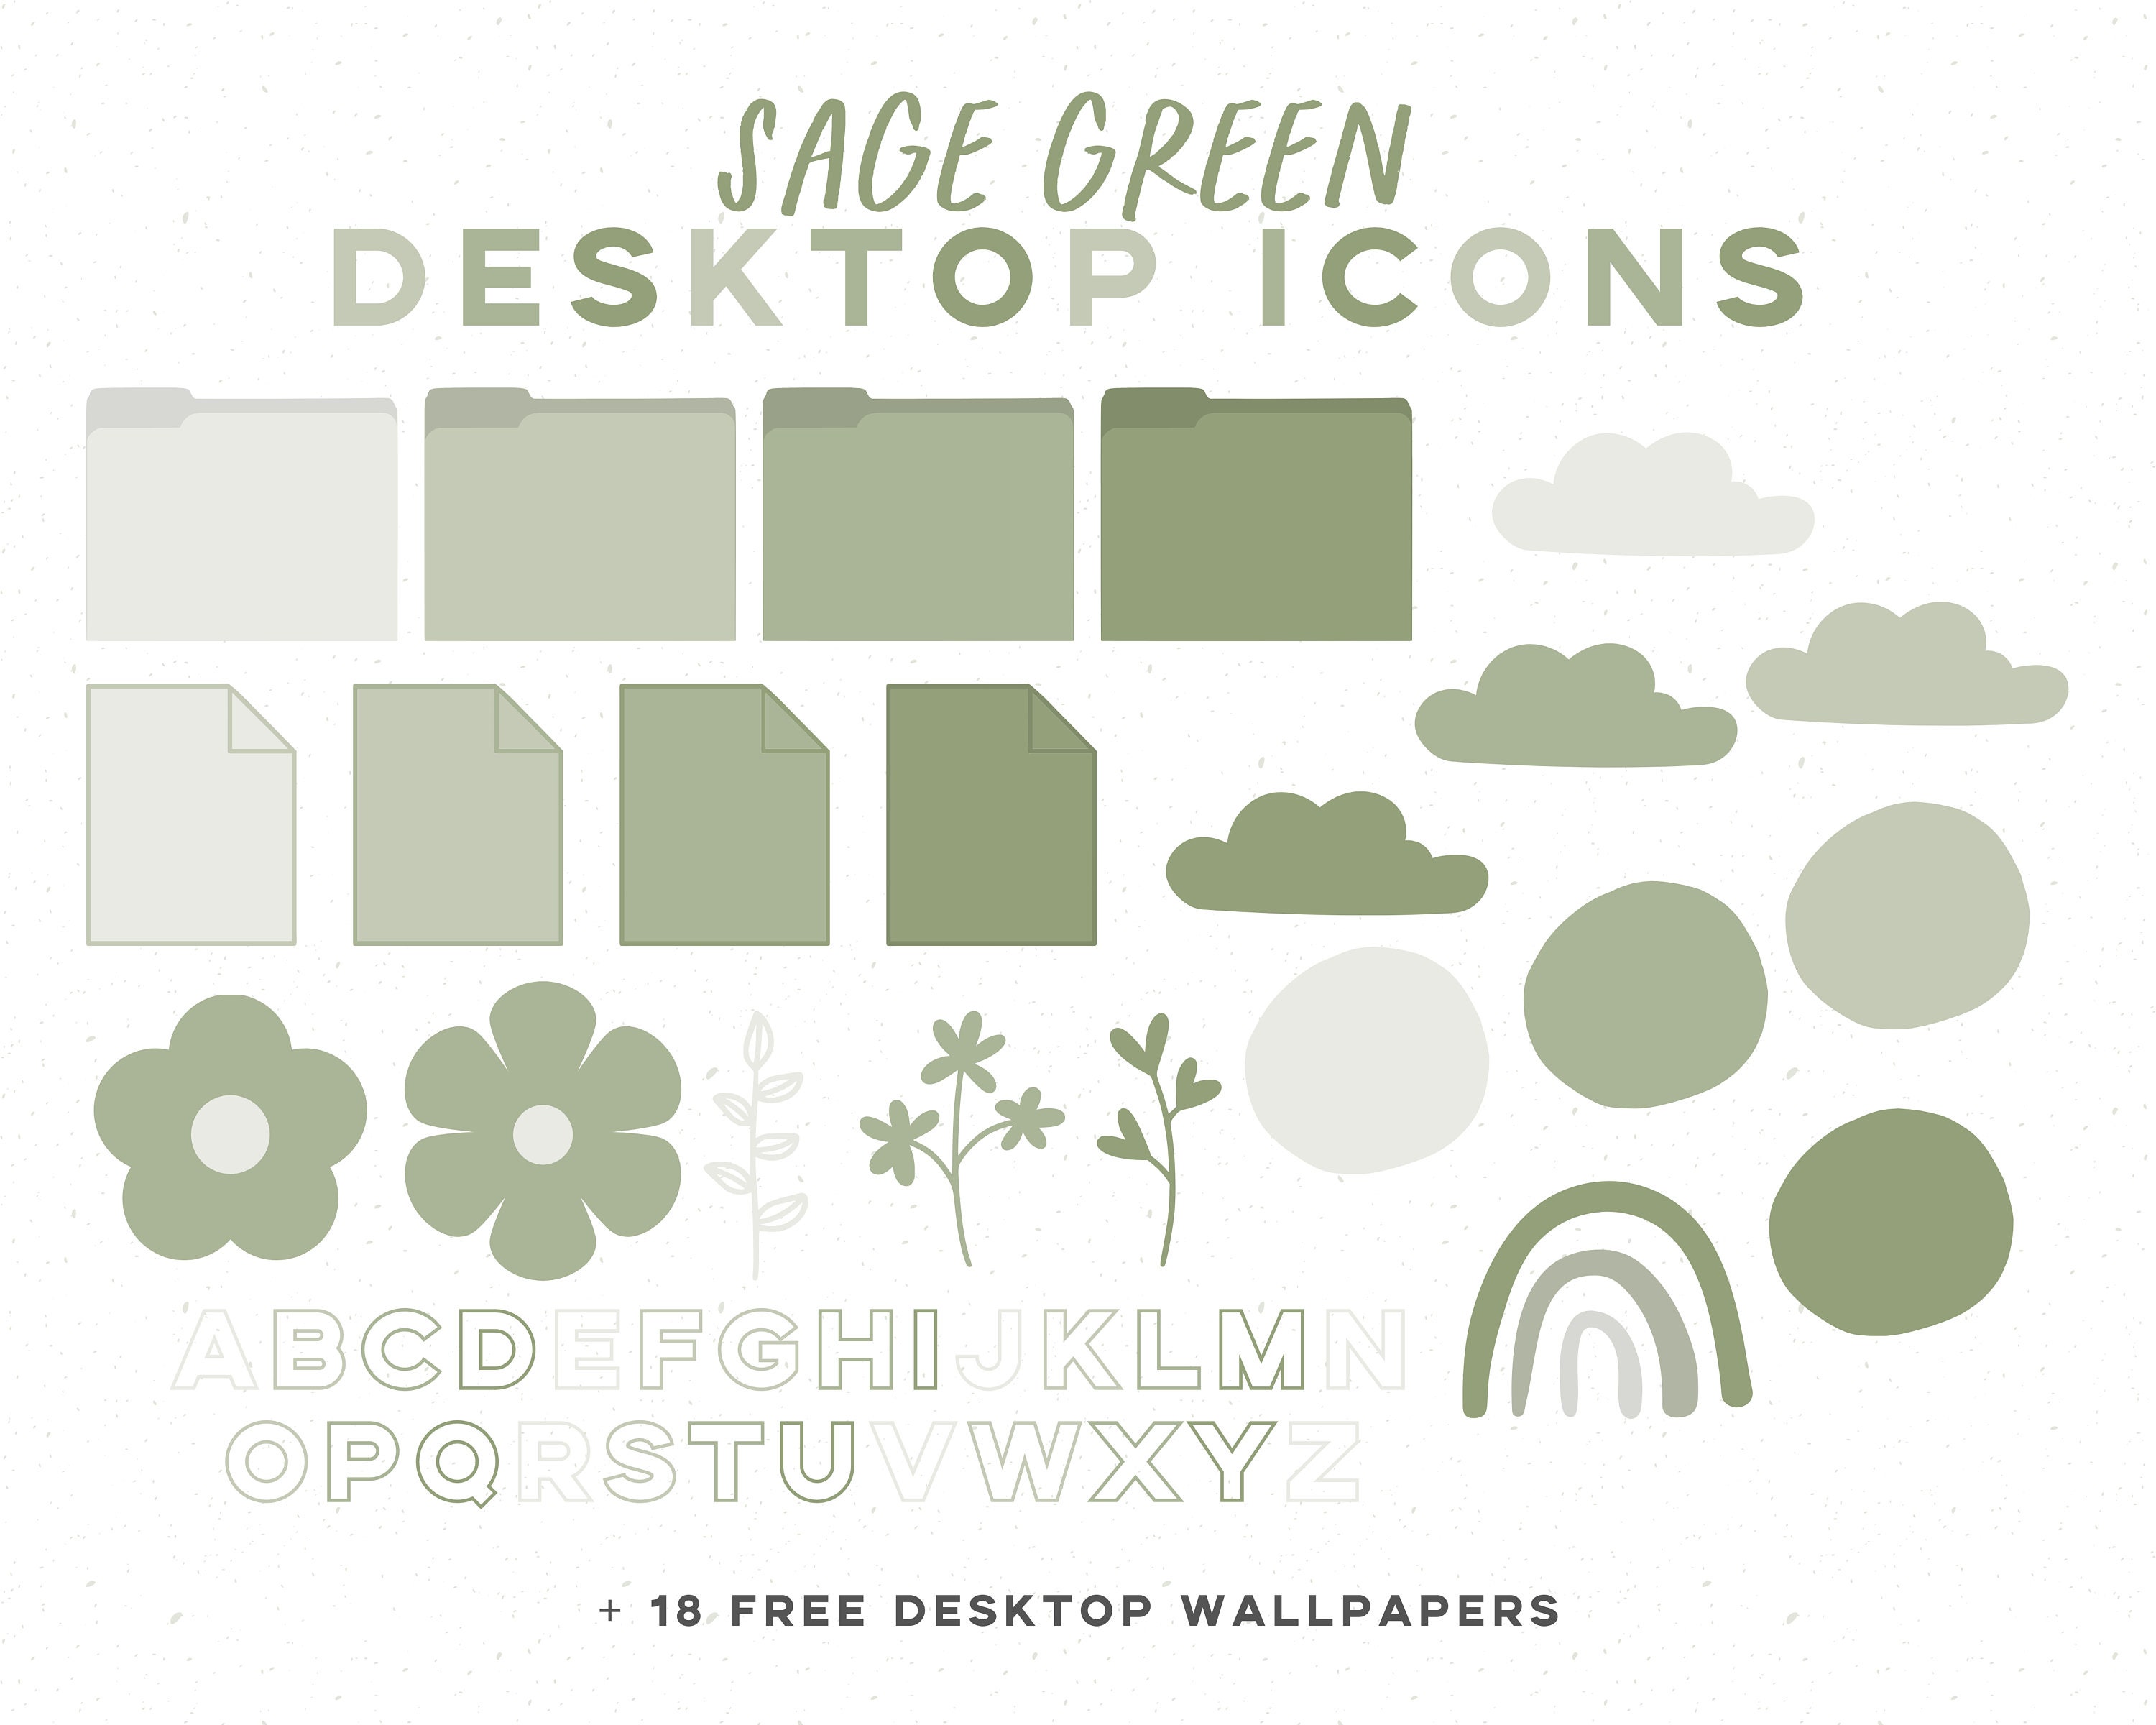 sage green desktop wallpaper  Cute laptop wallpaper Cute wallpapers for  ipad Desktop wa  Cute laptop wallpaper Desktop wallpaper art Cute  wallpapers for ipad